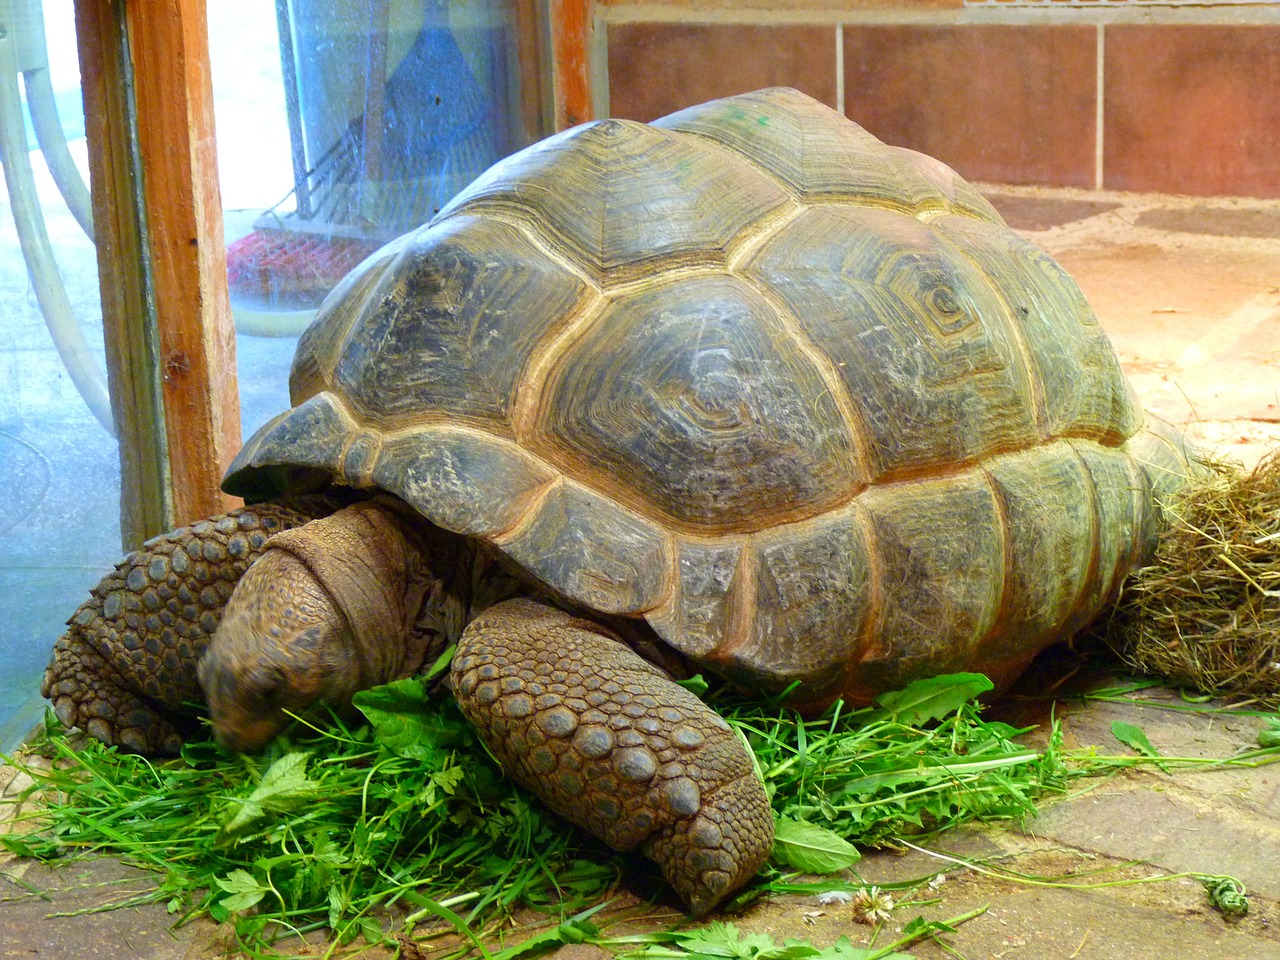 giant tortoise,genuine tortoise,testudinidae,turtle,testudinata,reptile,animal,creature,free pictures, free photos, free images, royalty free, free illustrations, public domain